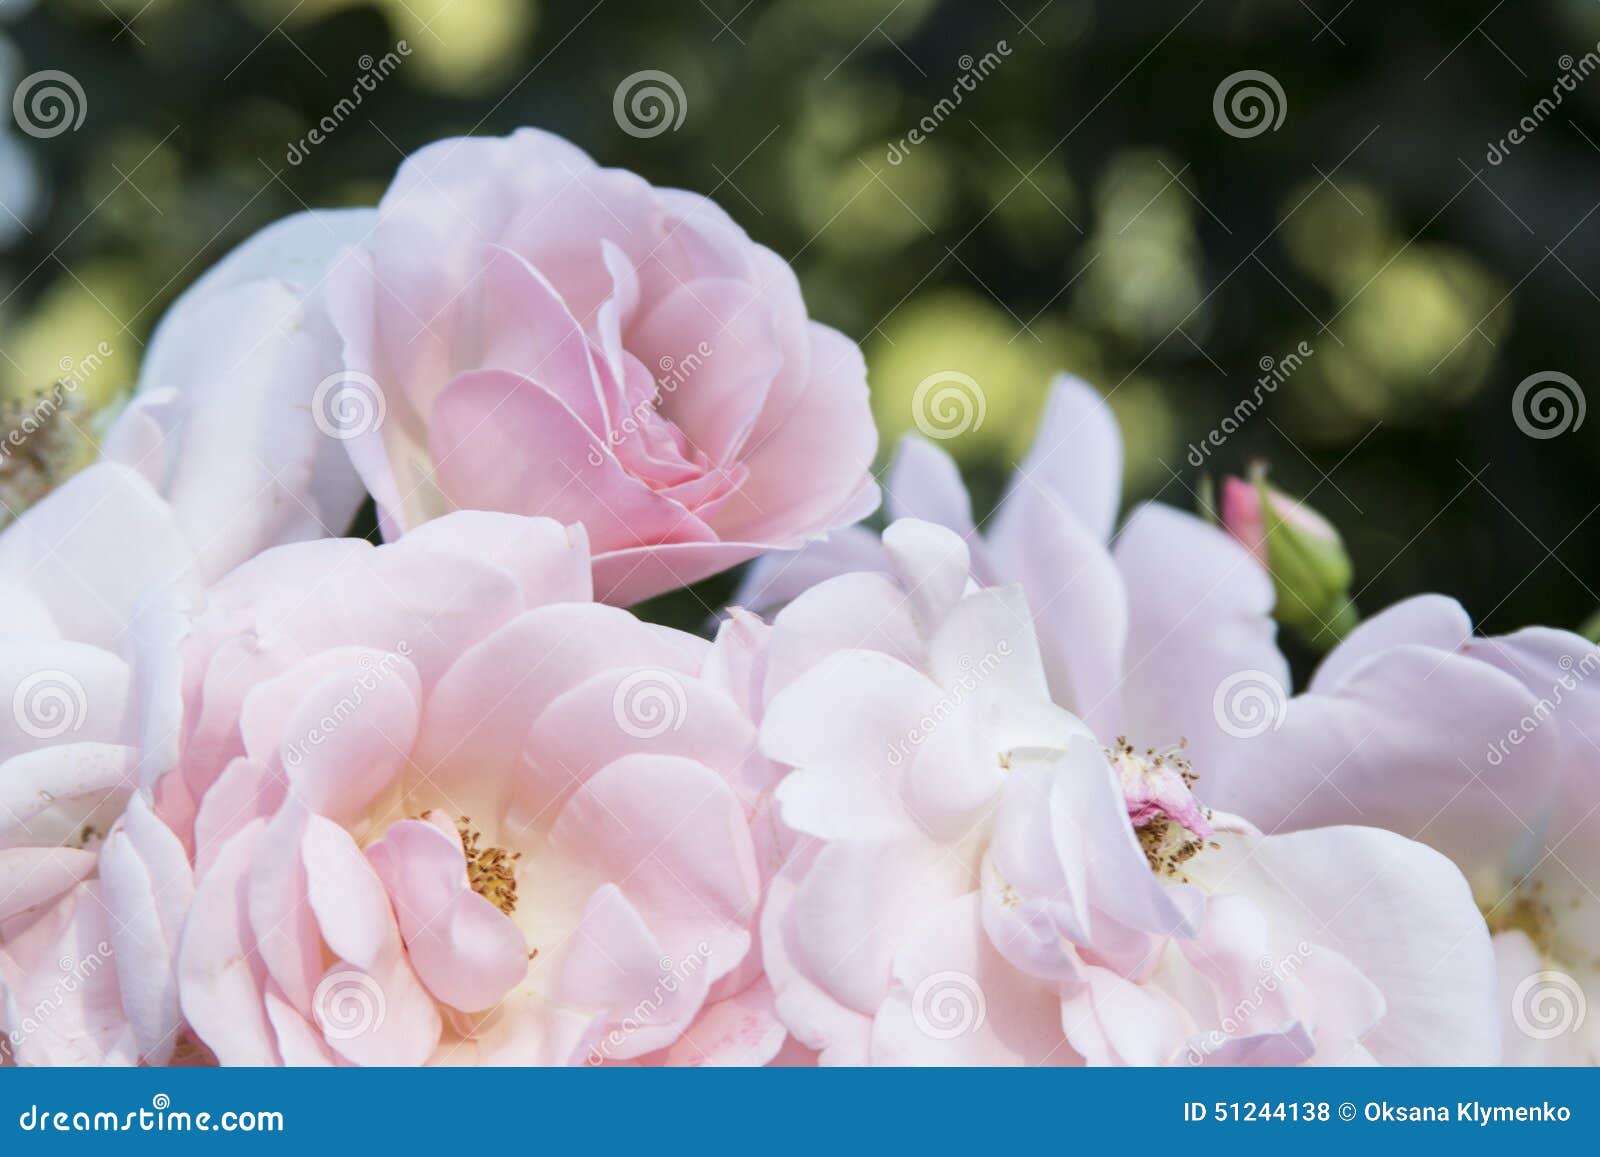 Rose pink, very tender, inflorescence